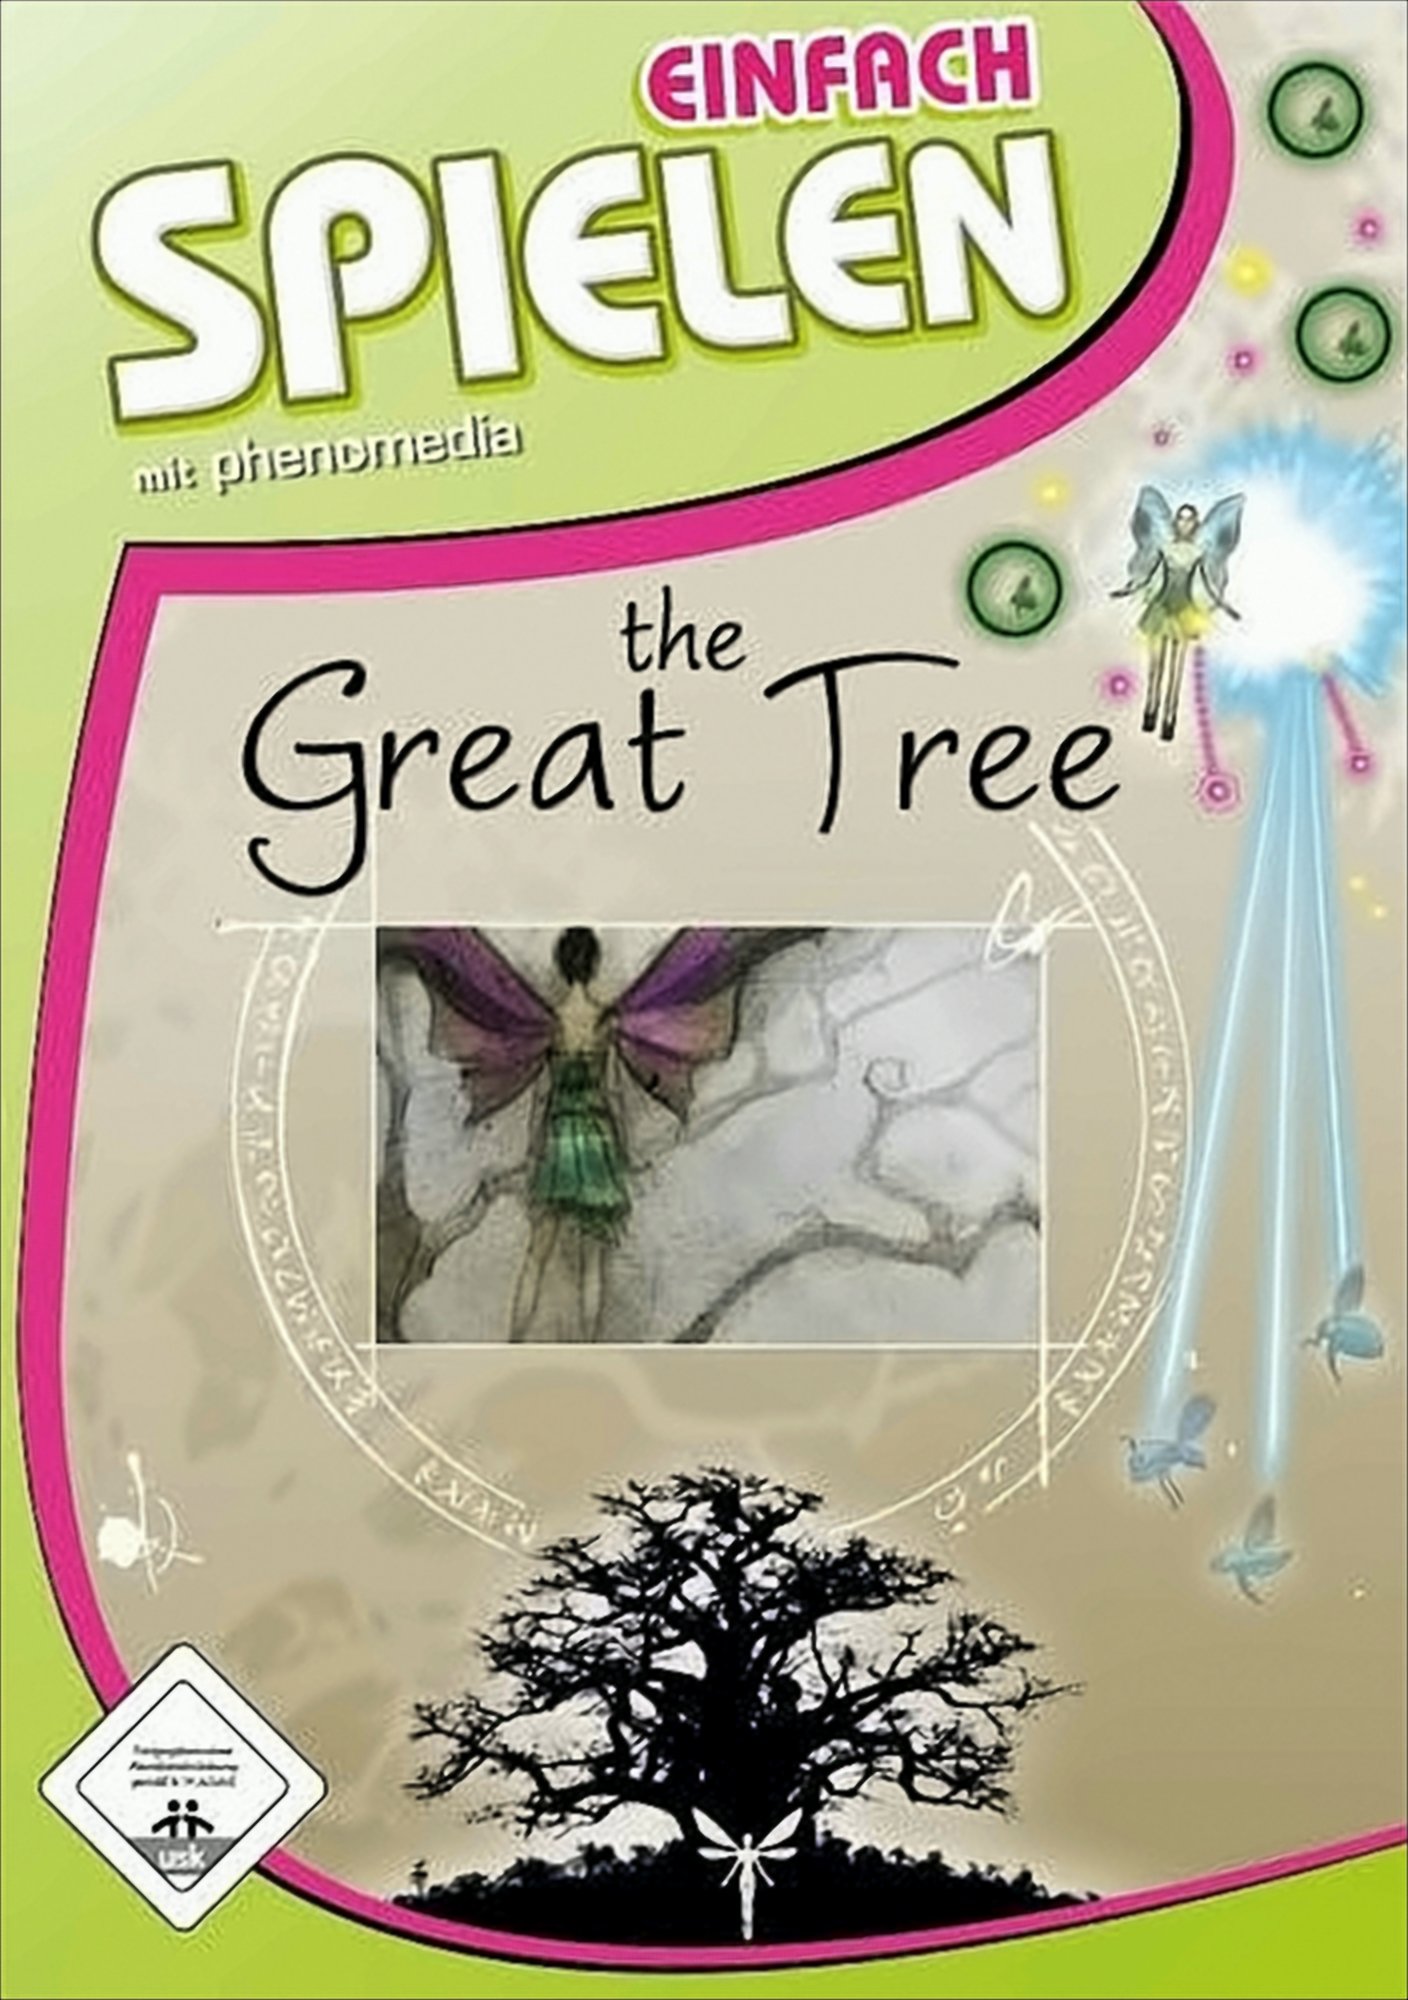 The Great Tree von Phenomedia